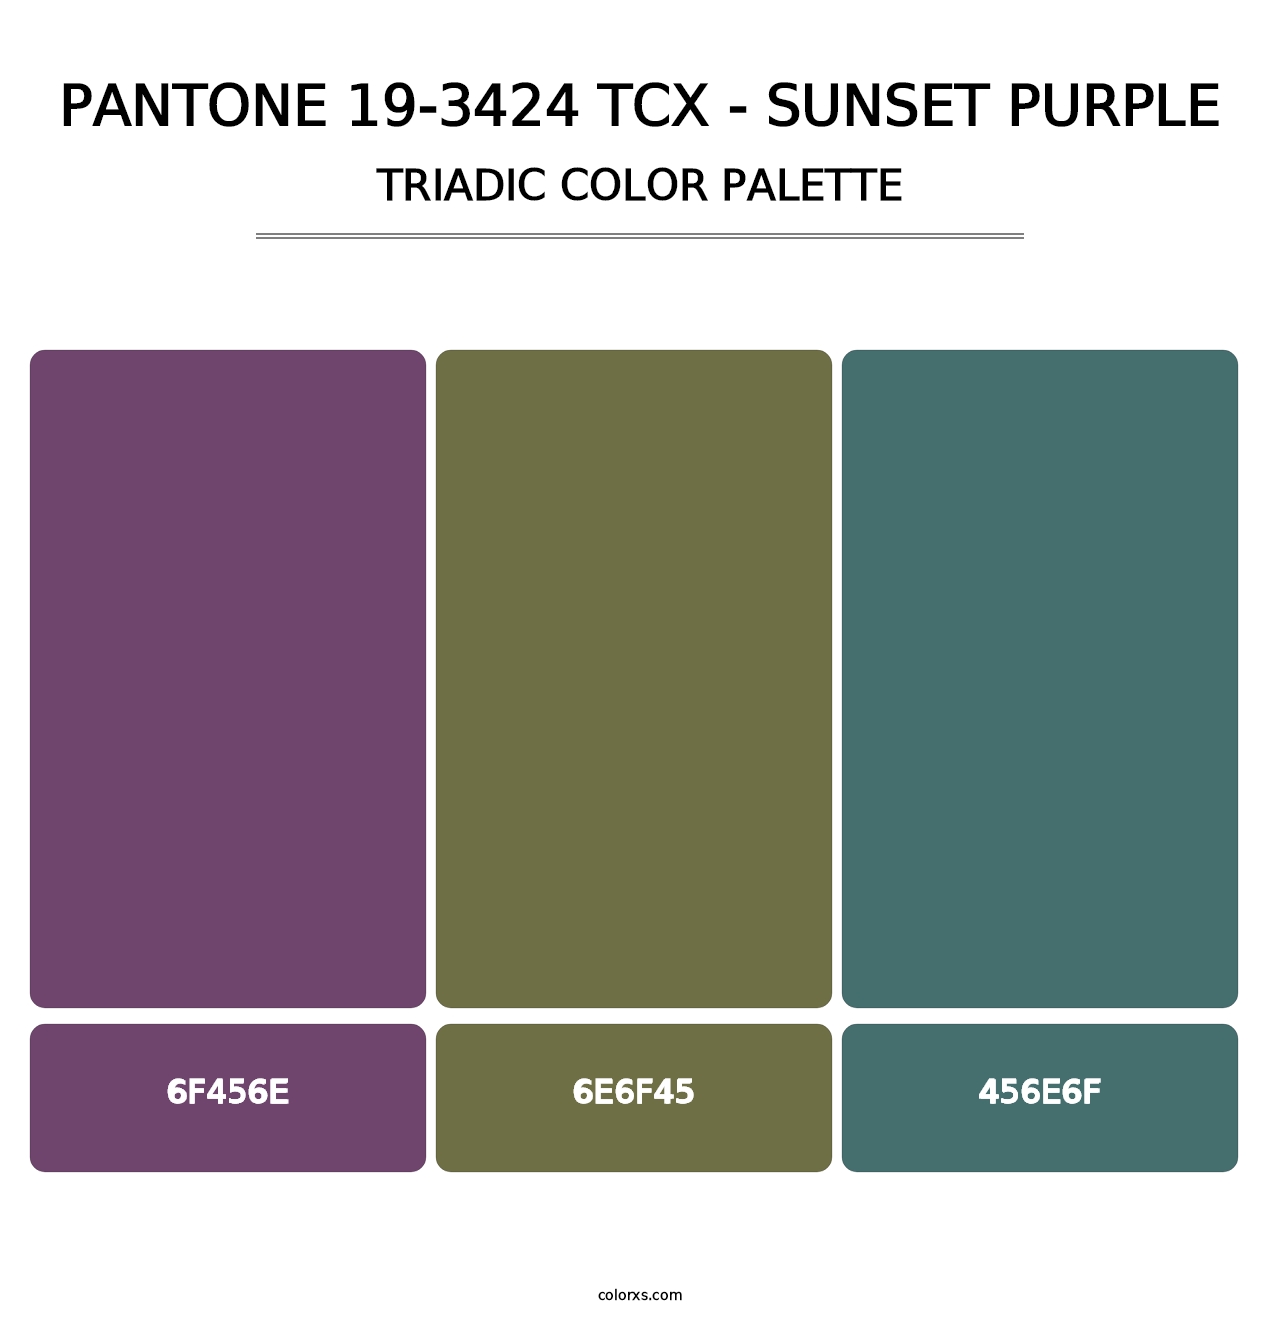 PANTONE 19-3424 TCX - Sunset Purple - Triadic Color Palette